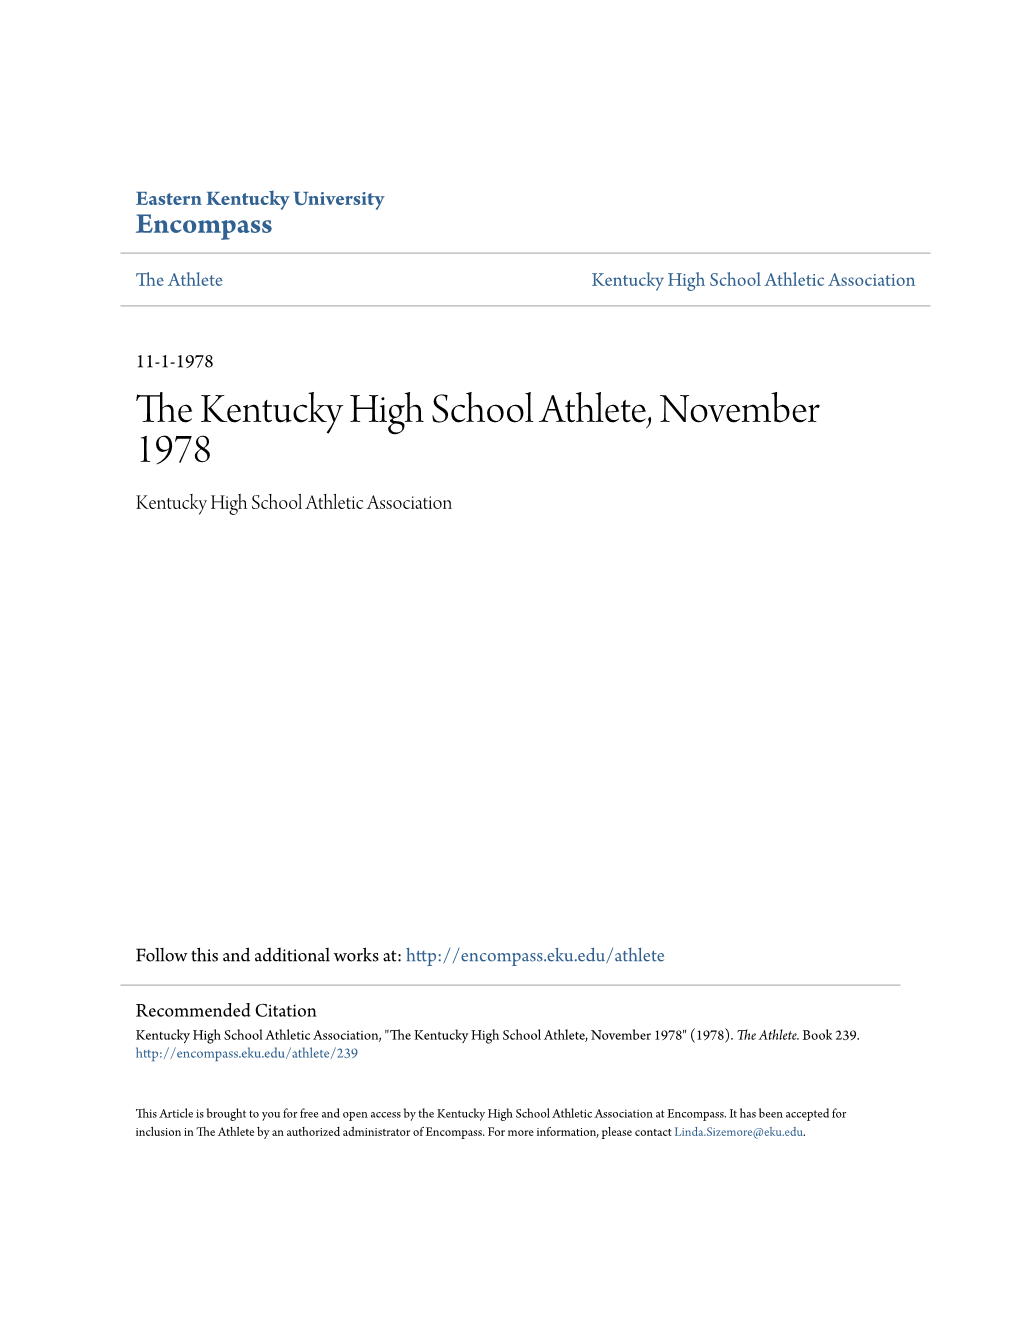 The Kentucky High School Athlete, November 1978 Kentucky High School Athletic Association